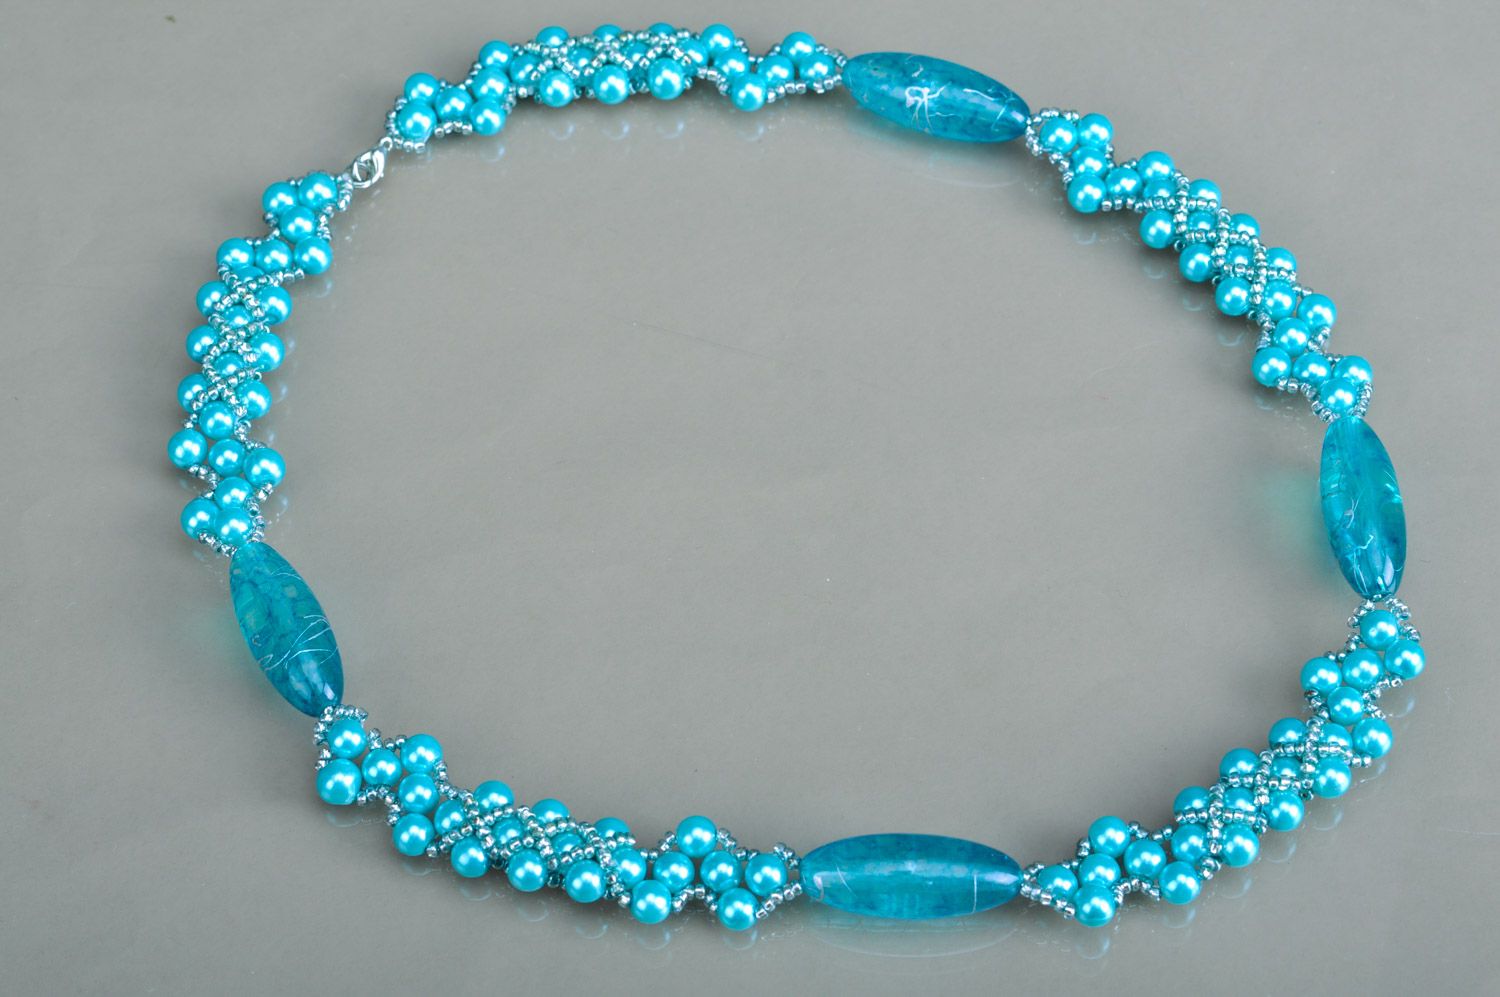 Collier en perles de rocaille bleu de taille moyenne tressé fait main Iceberg  photo 2